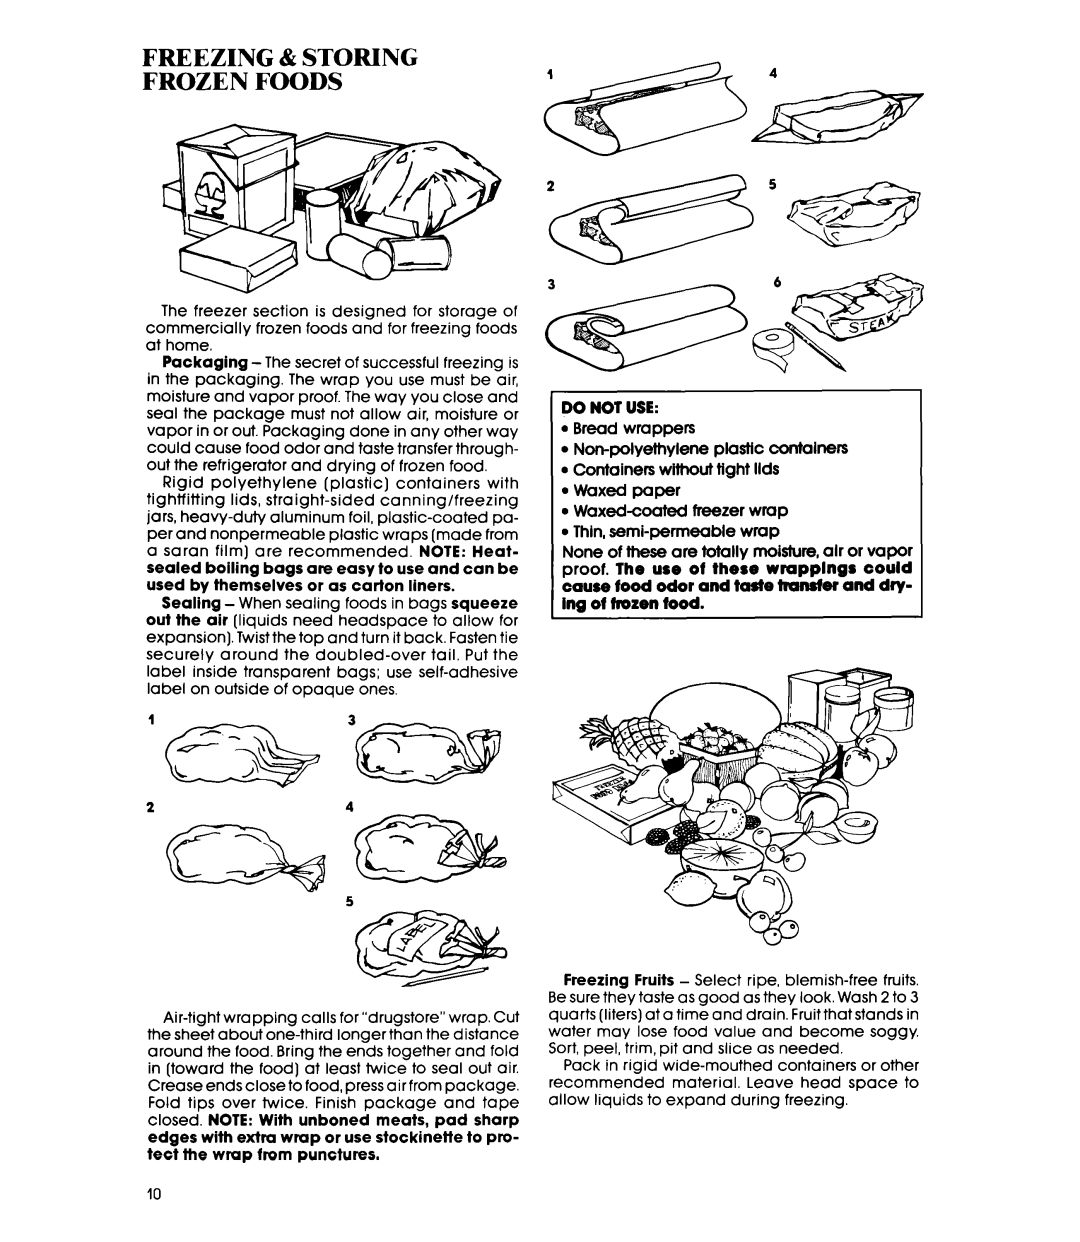 Whirlpool EL11SC, EL13SC manual Freezing & Storing Frozen Foods, l Bread wrappers, l Waxed paper, ing of frozen tood 